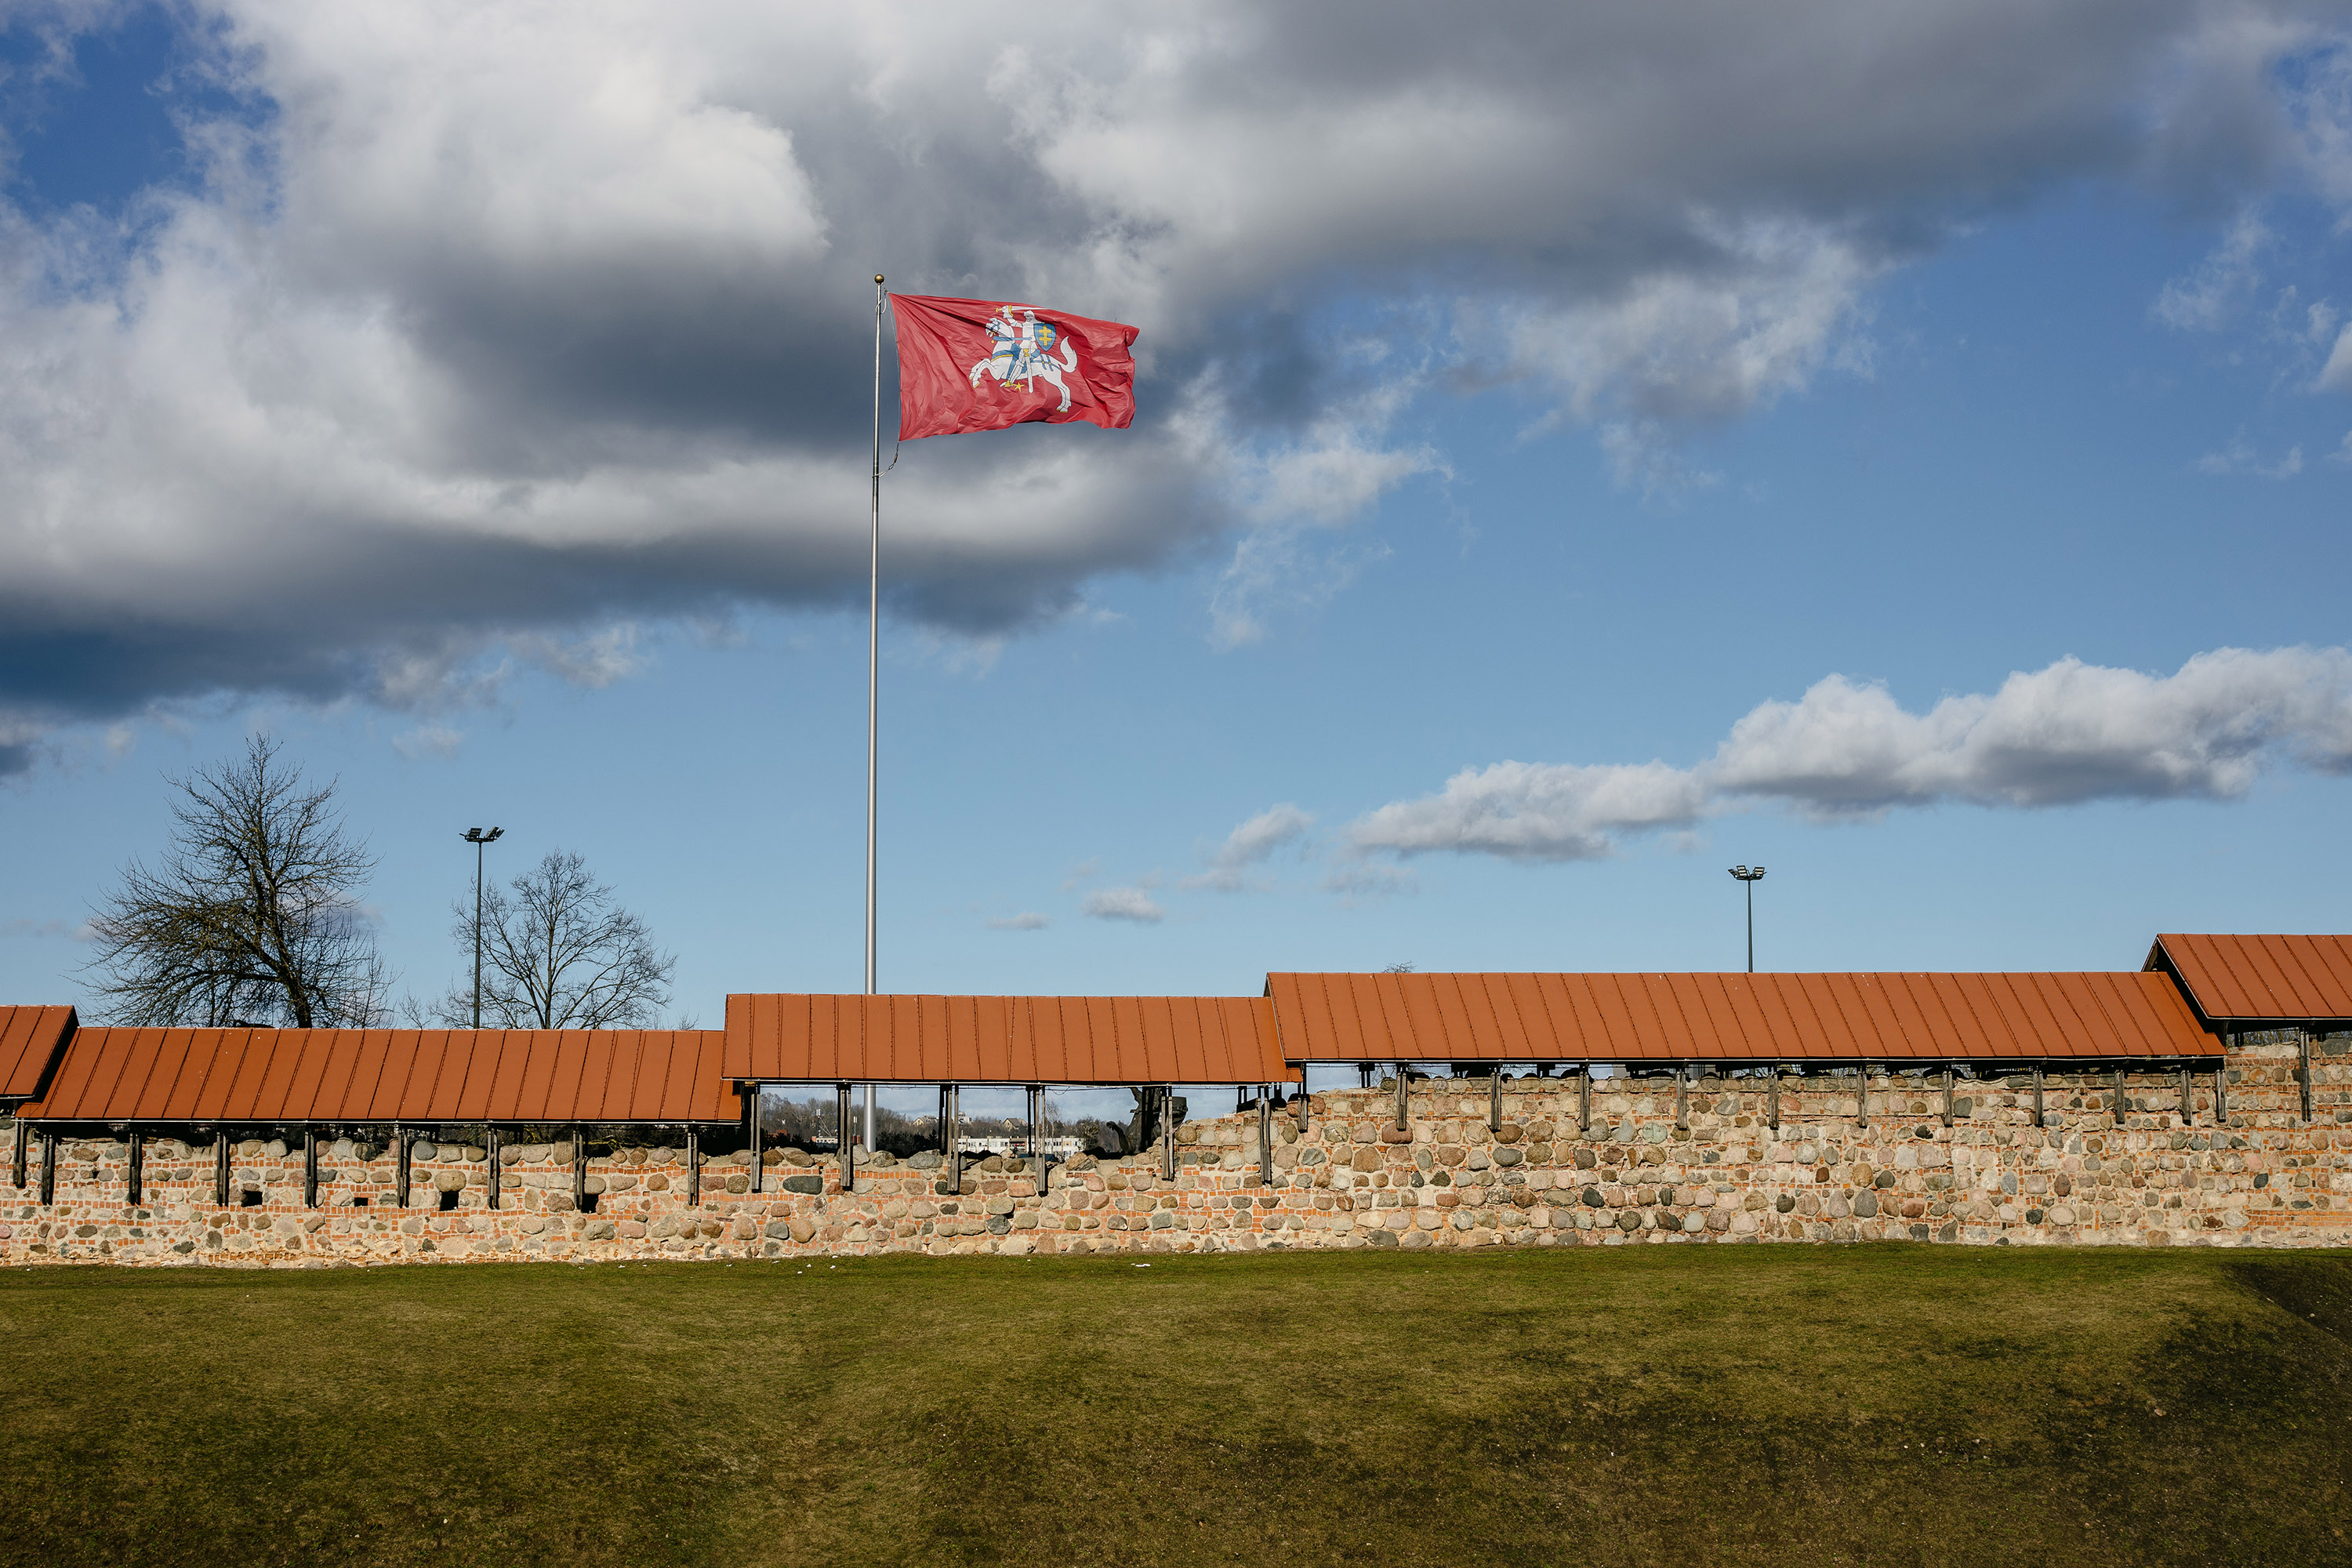 Lithuanian historical flag flown on Kaunas castle - Lithuania - Shot at f4